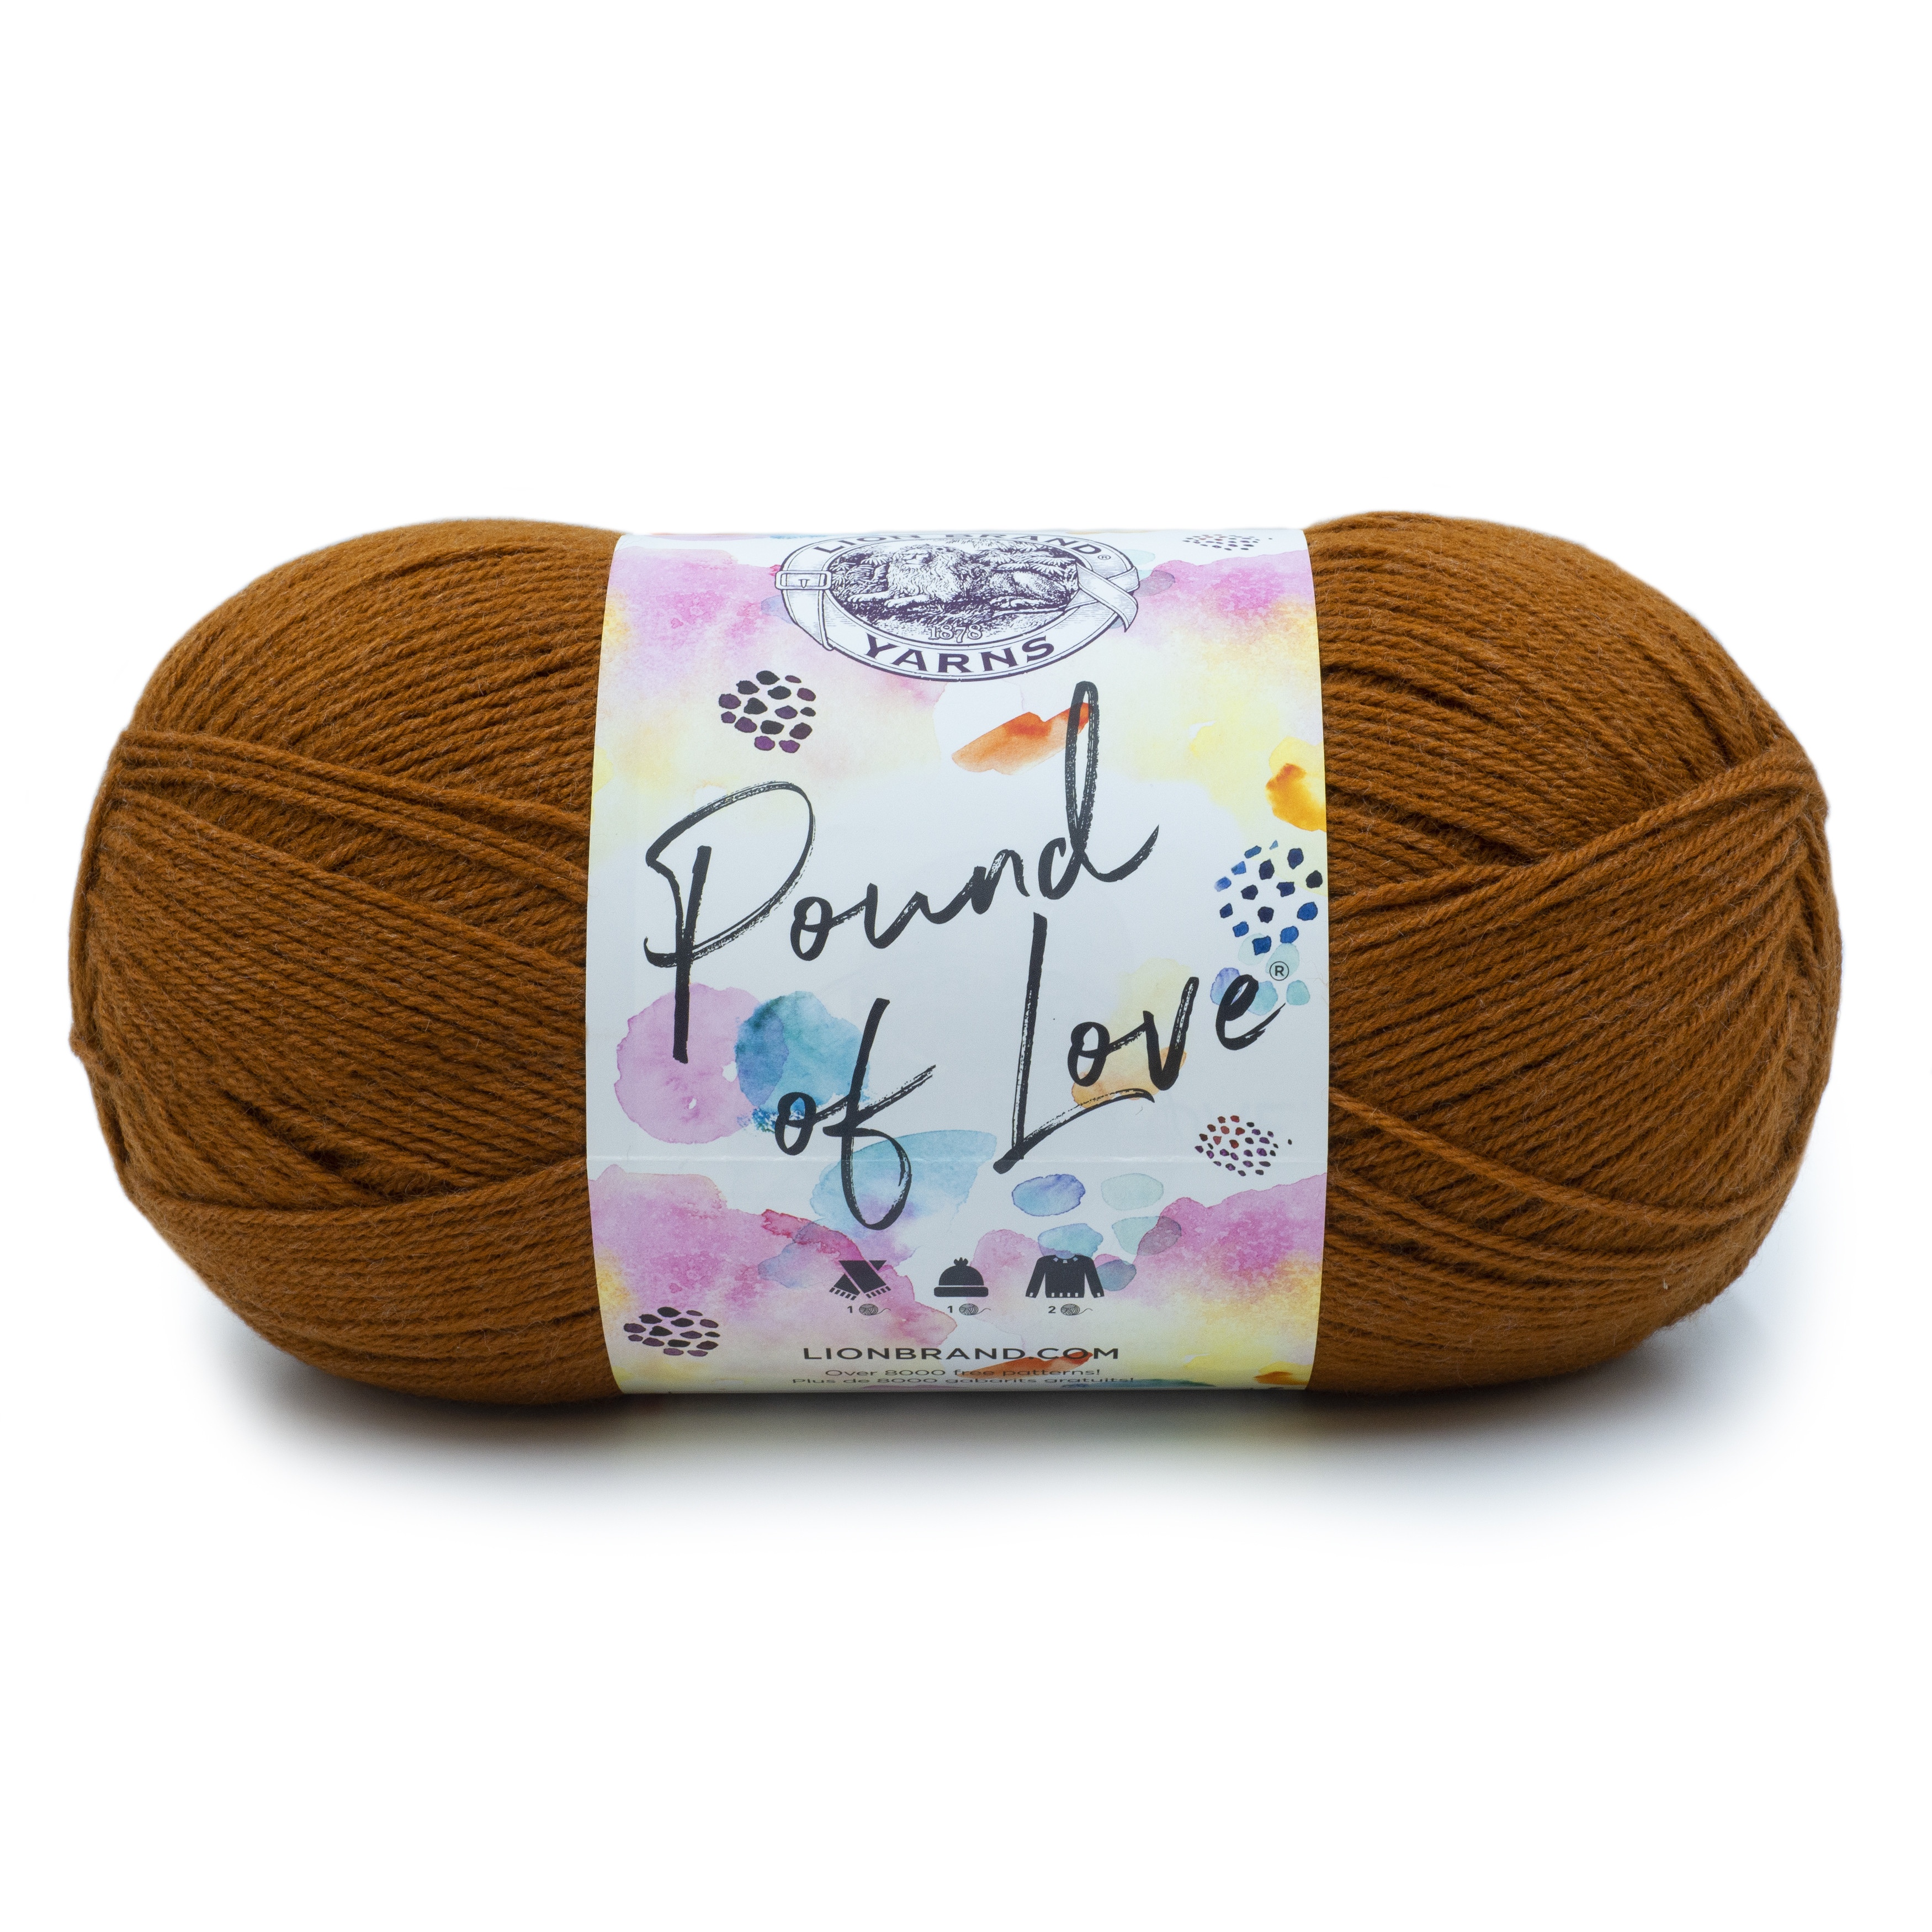 Lion Brand Yarn Pound of Love Umber 1 Pound Baby Medium Acrylic Brown Yarn  1 Pack 